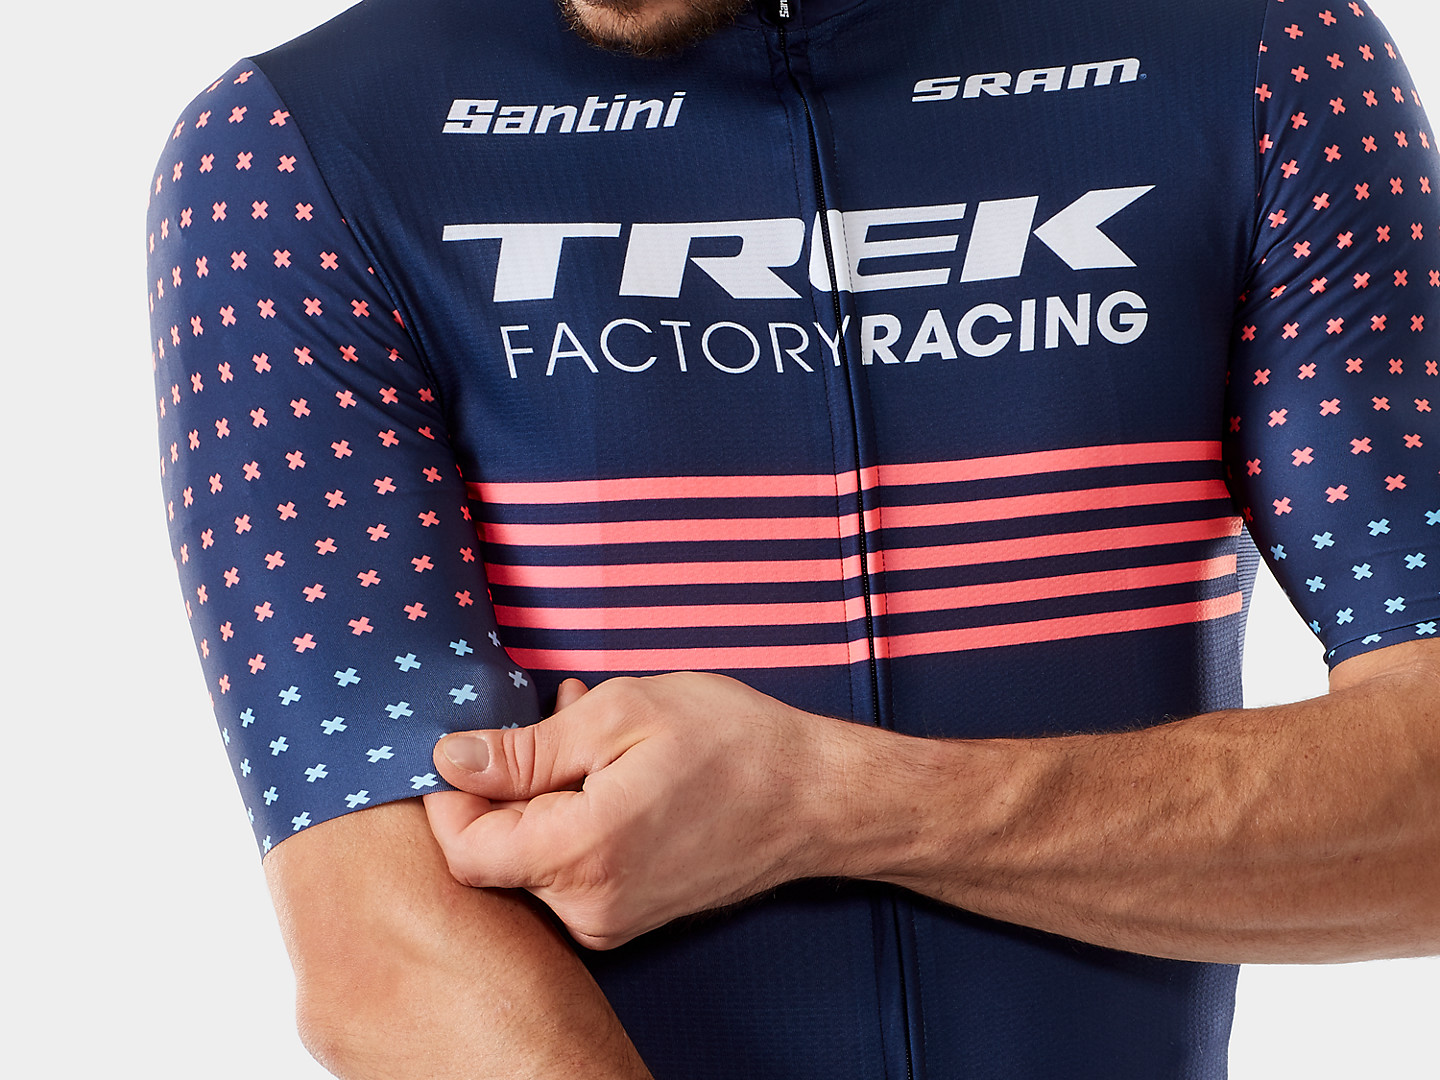 Camiseta masculina de ciclismo Santini réplica da equipe CX da Trek Factory Racing